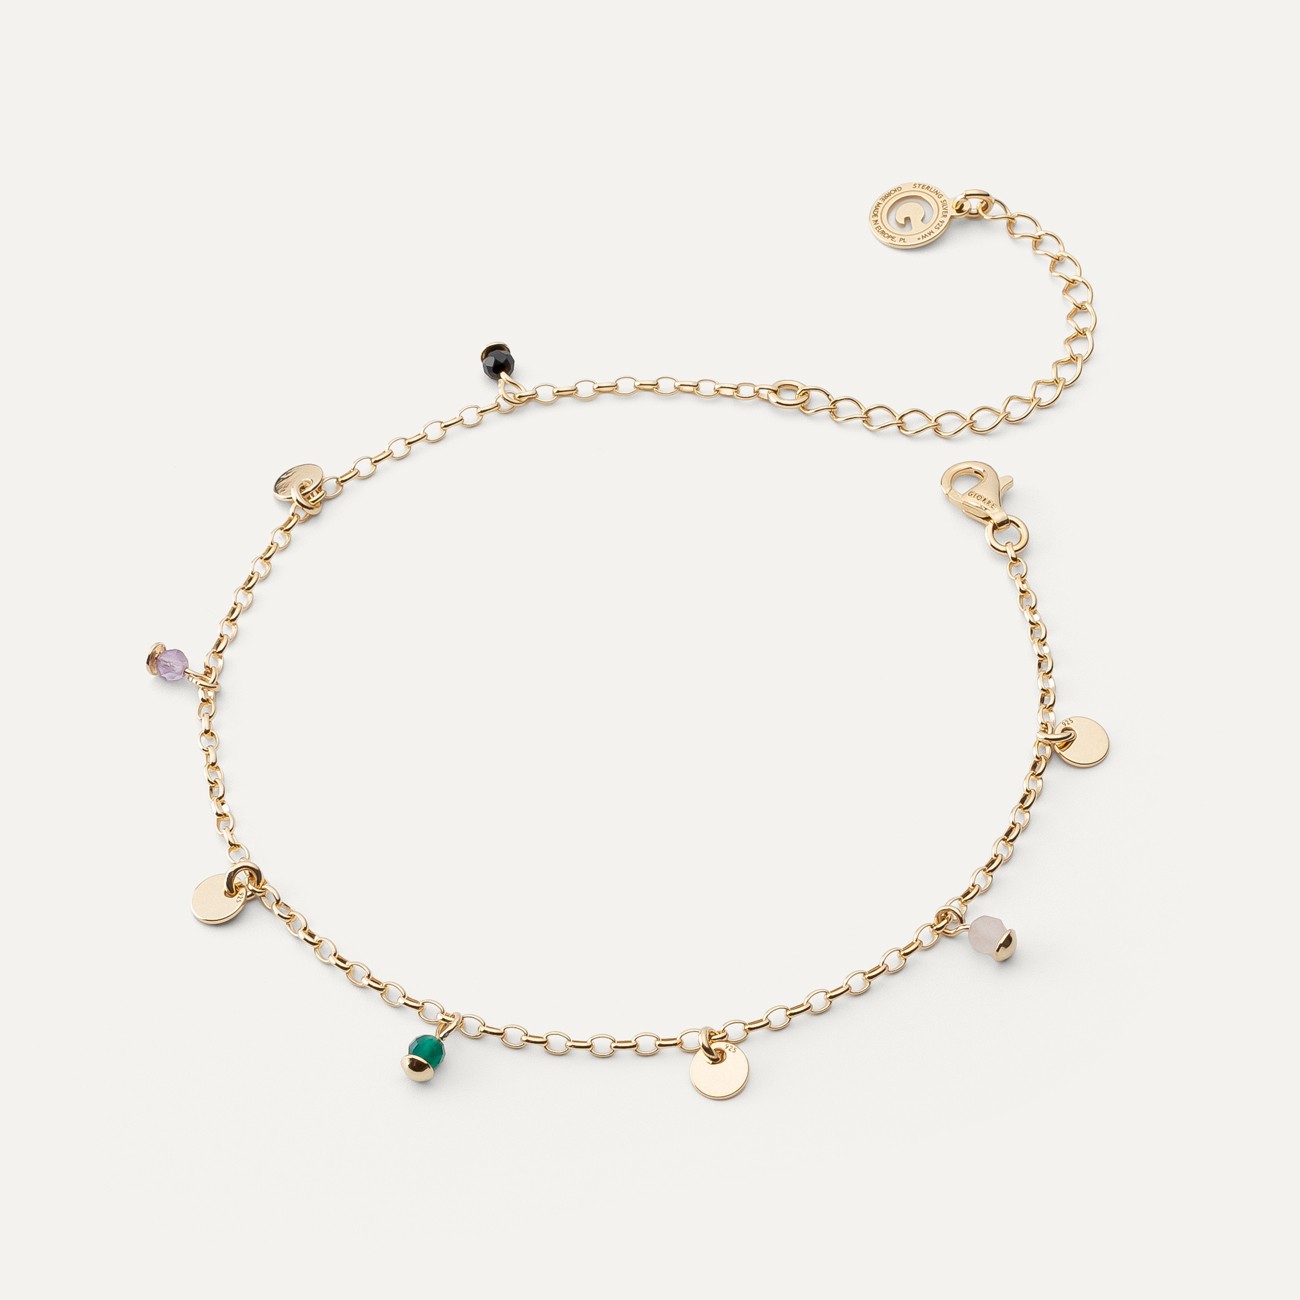 Giorre Woman's Bracelet 38517